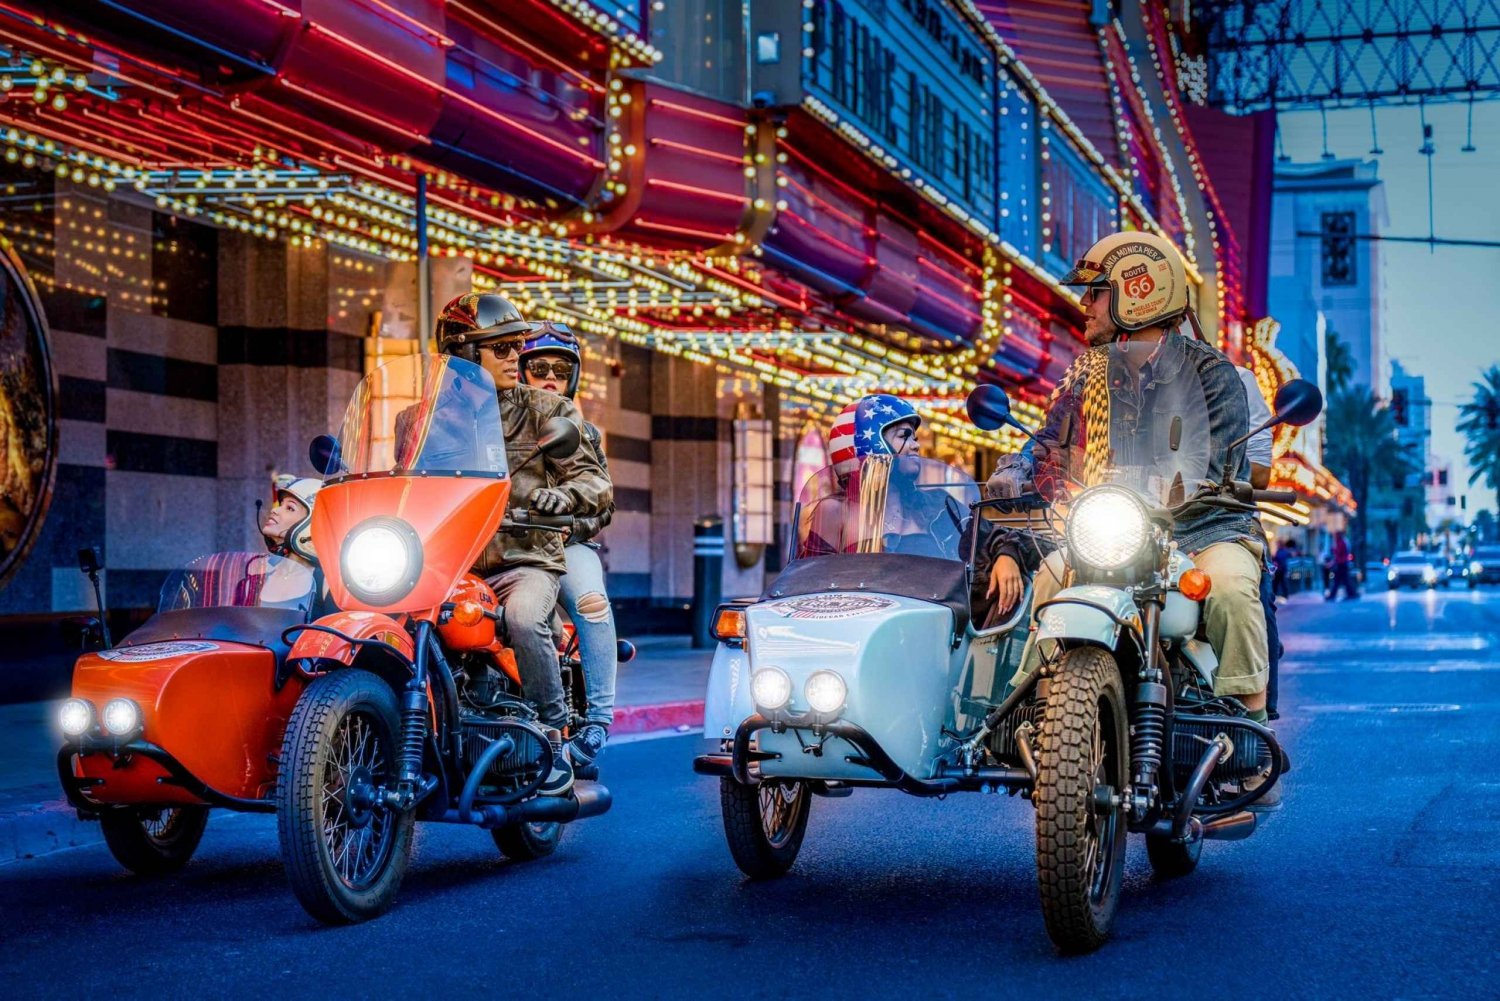 Las Vegas: Sidecar Tour über den Las Vegas Strip bei Nacht